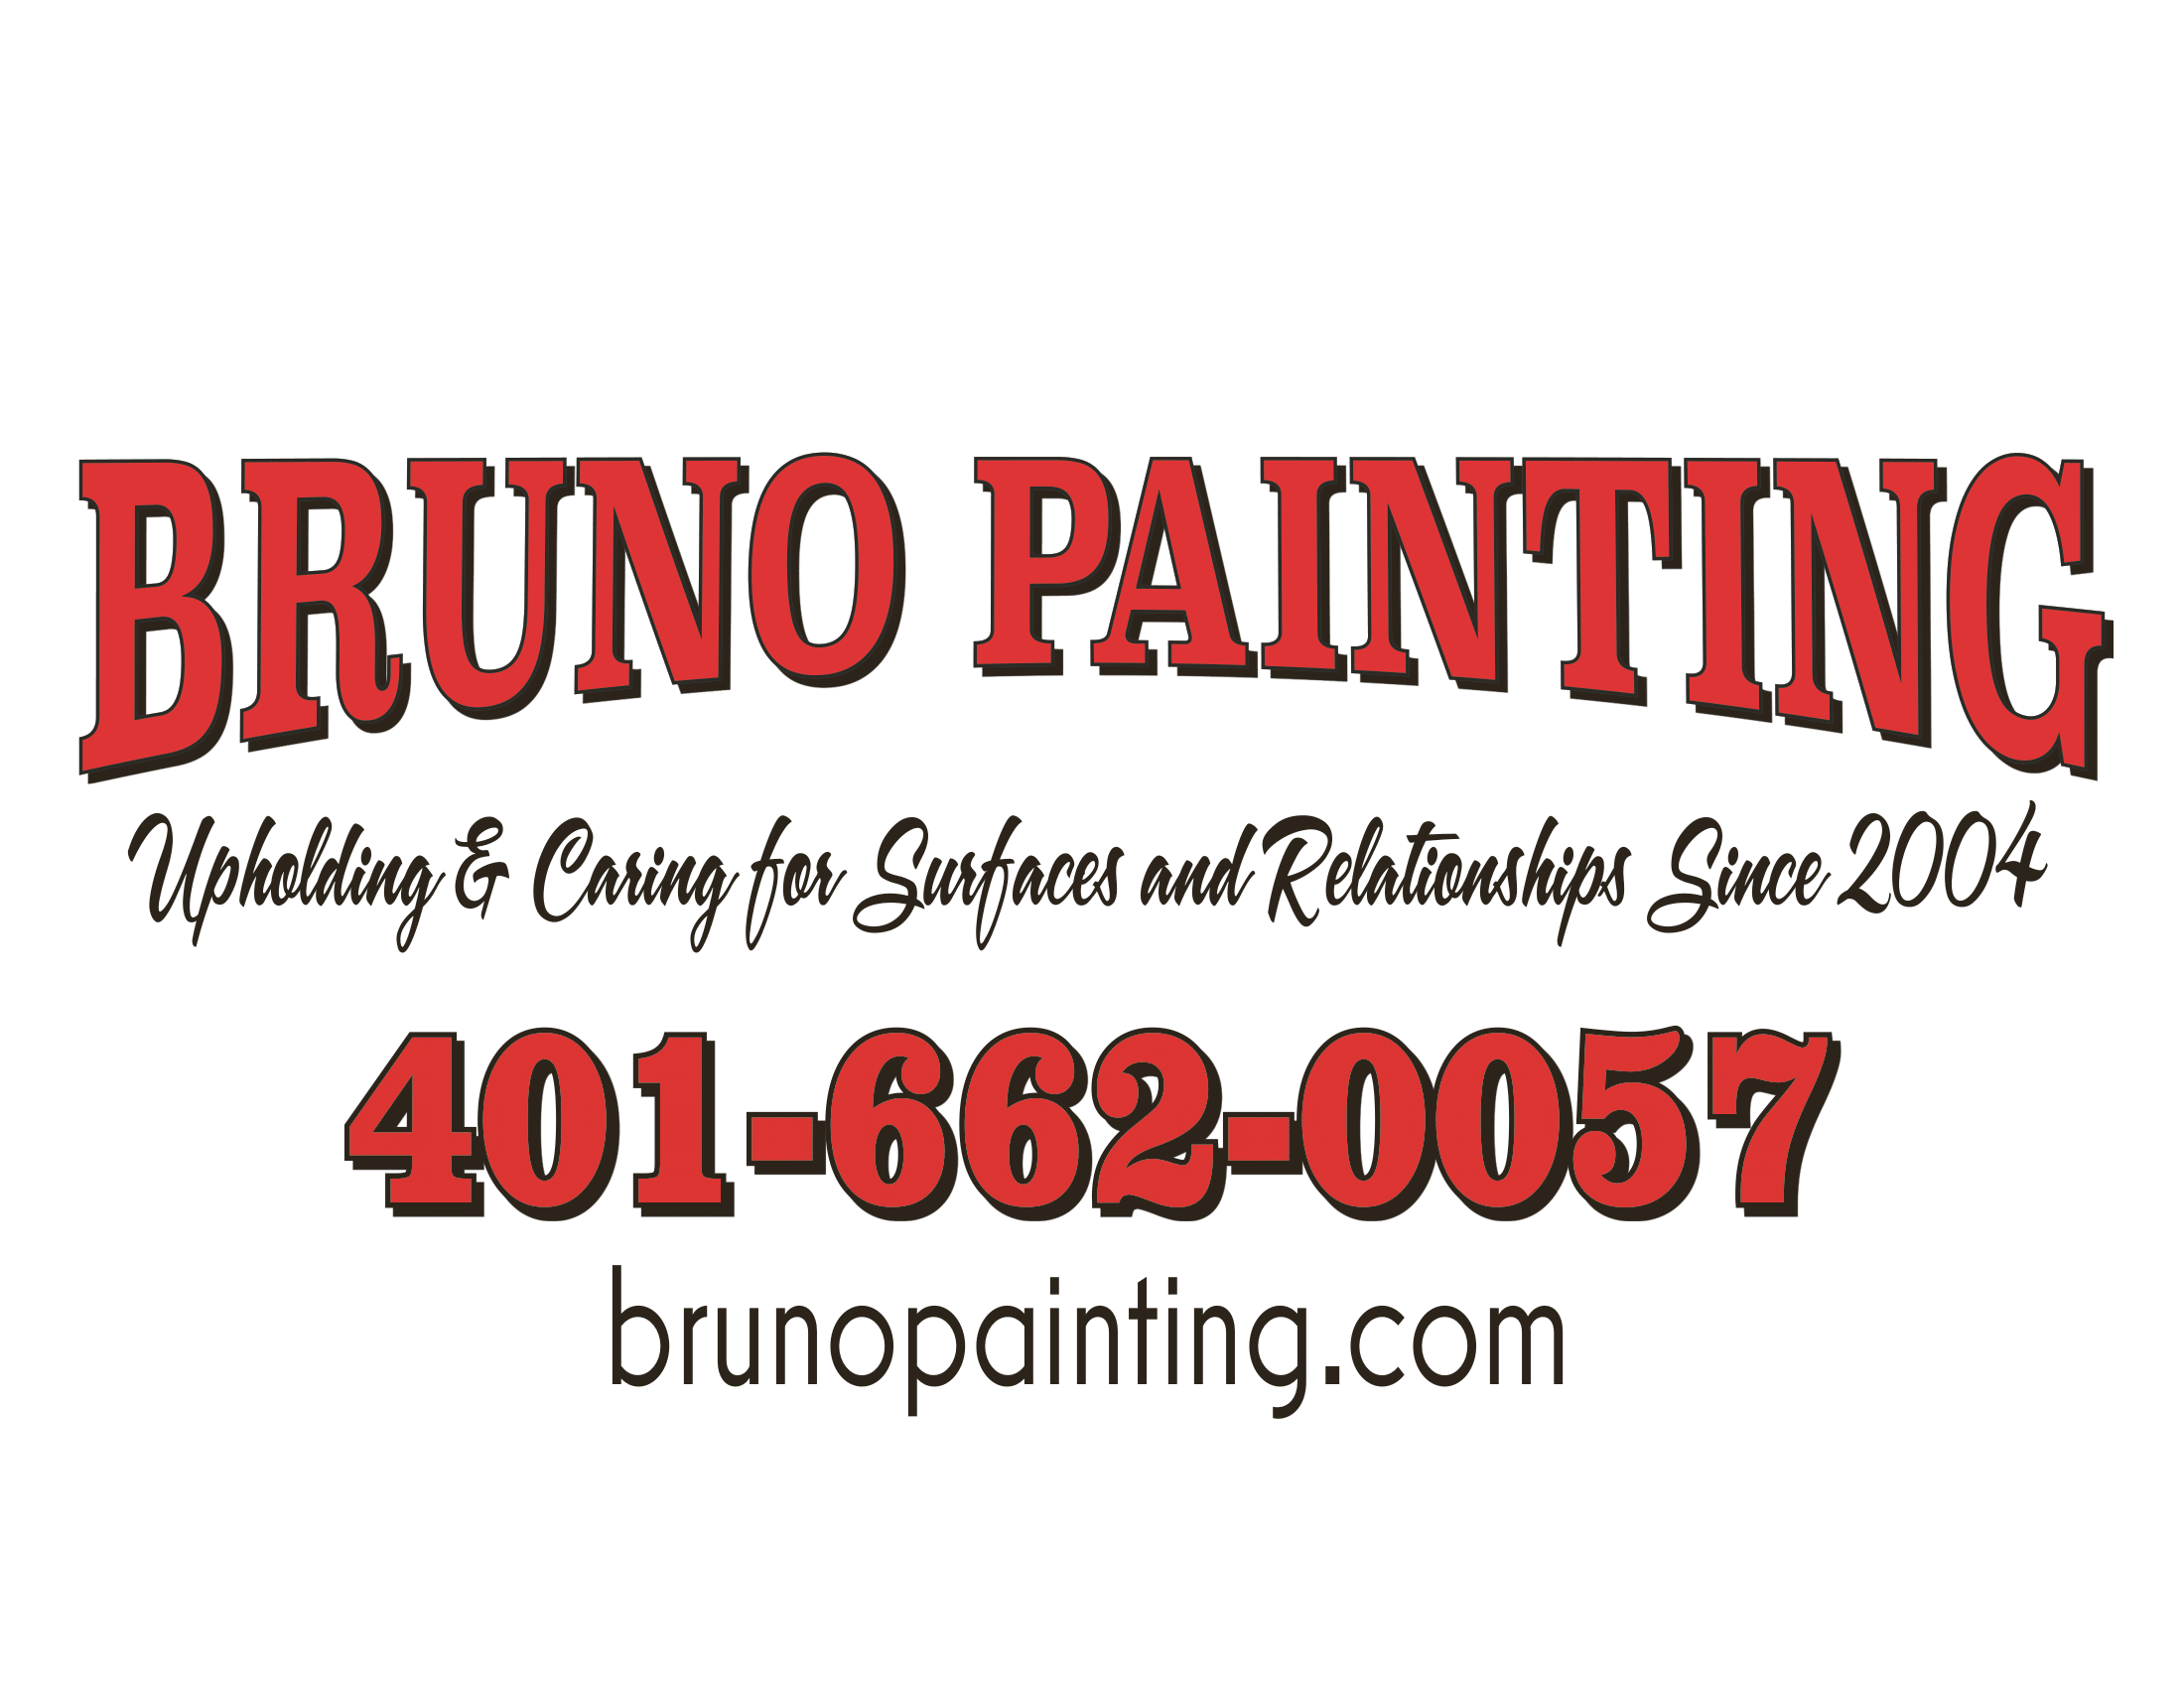 Bruno painting logo.png